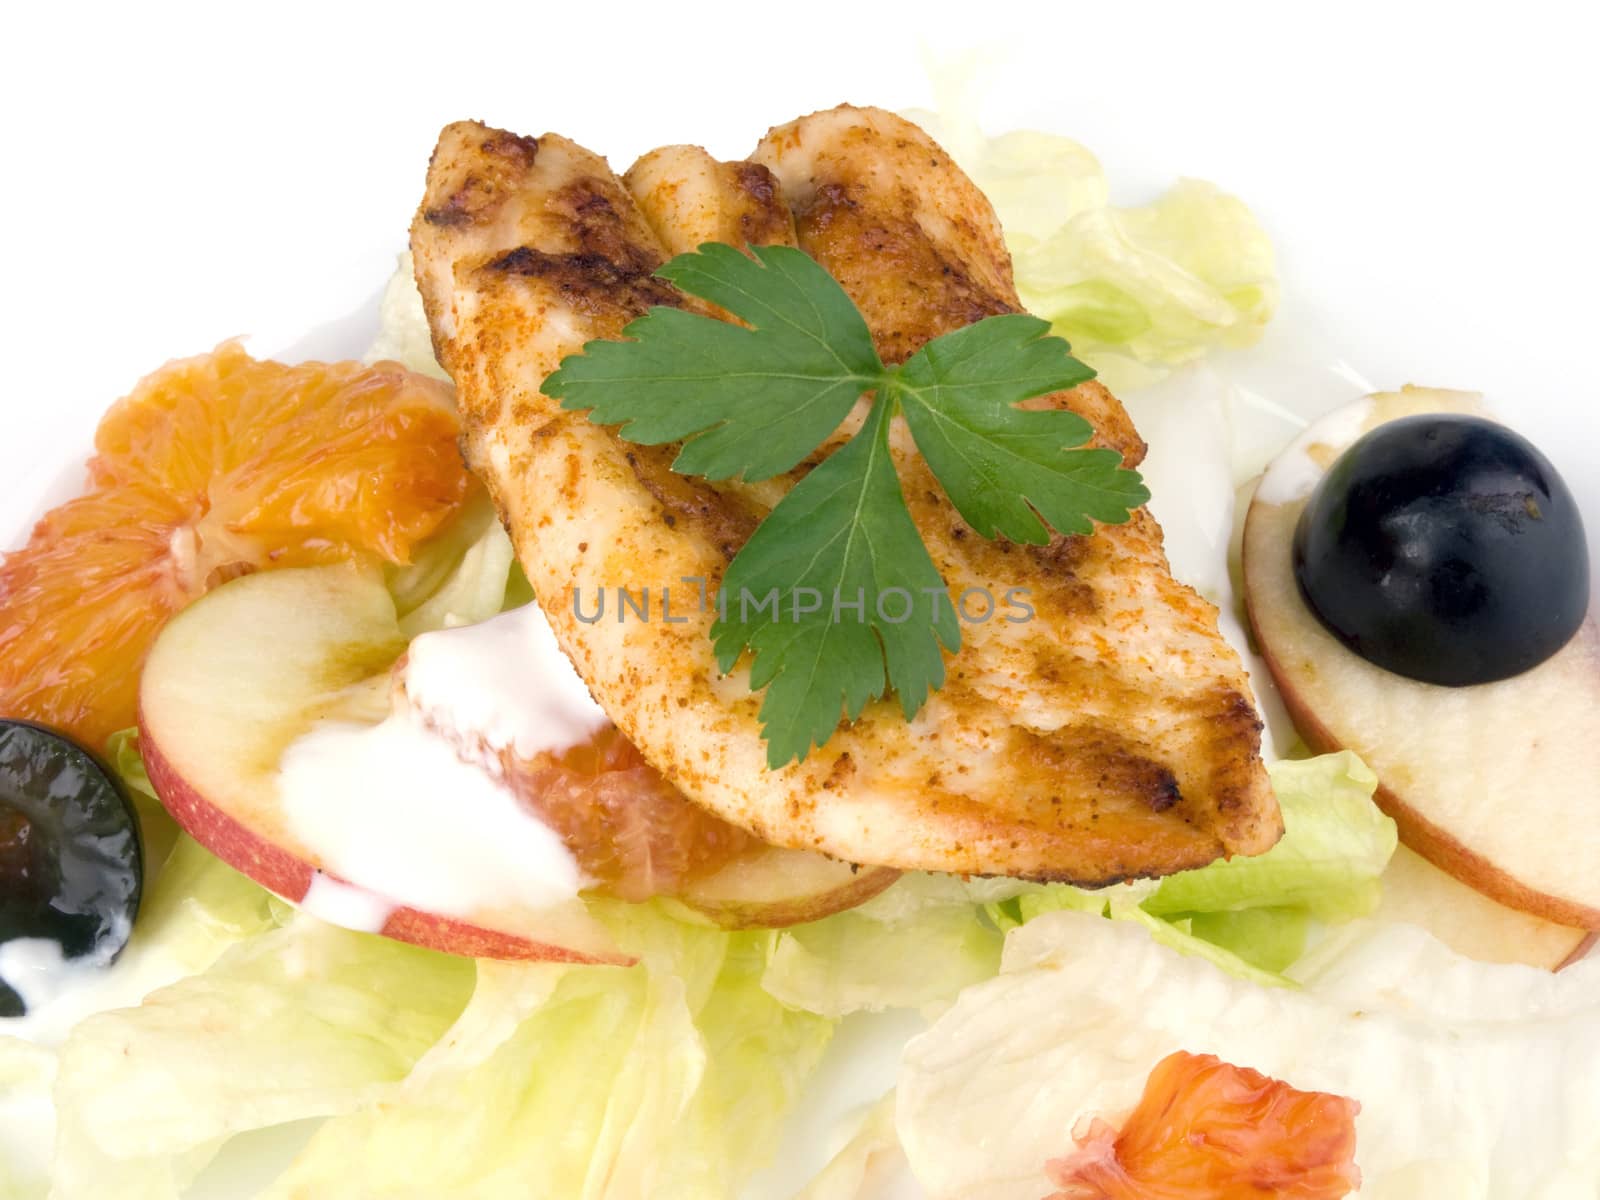 Grilled chicken breast with salad by mrsNstudio